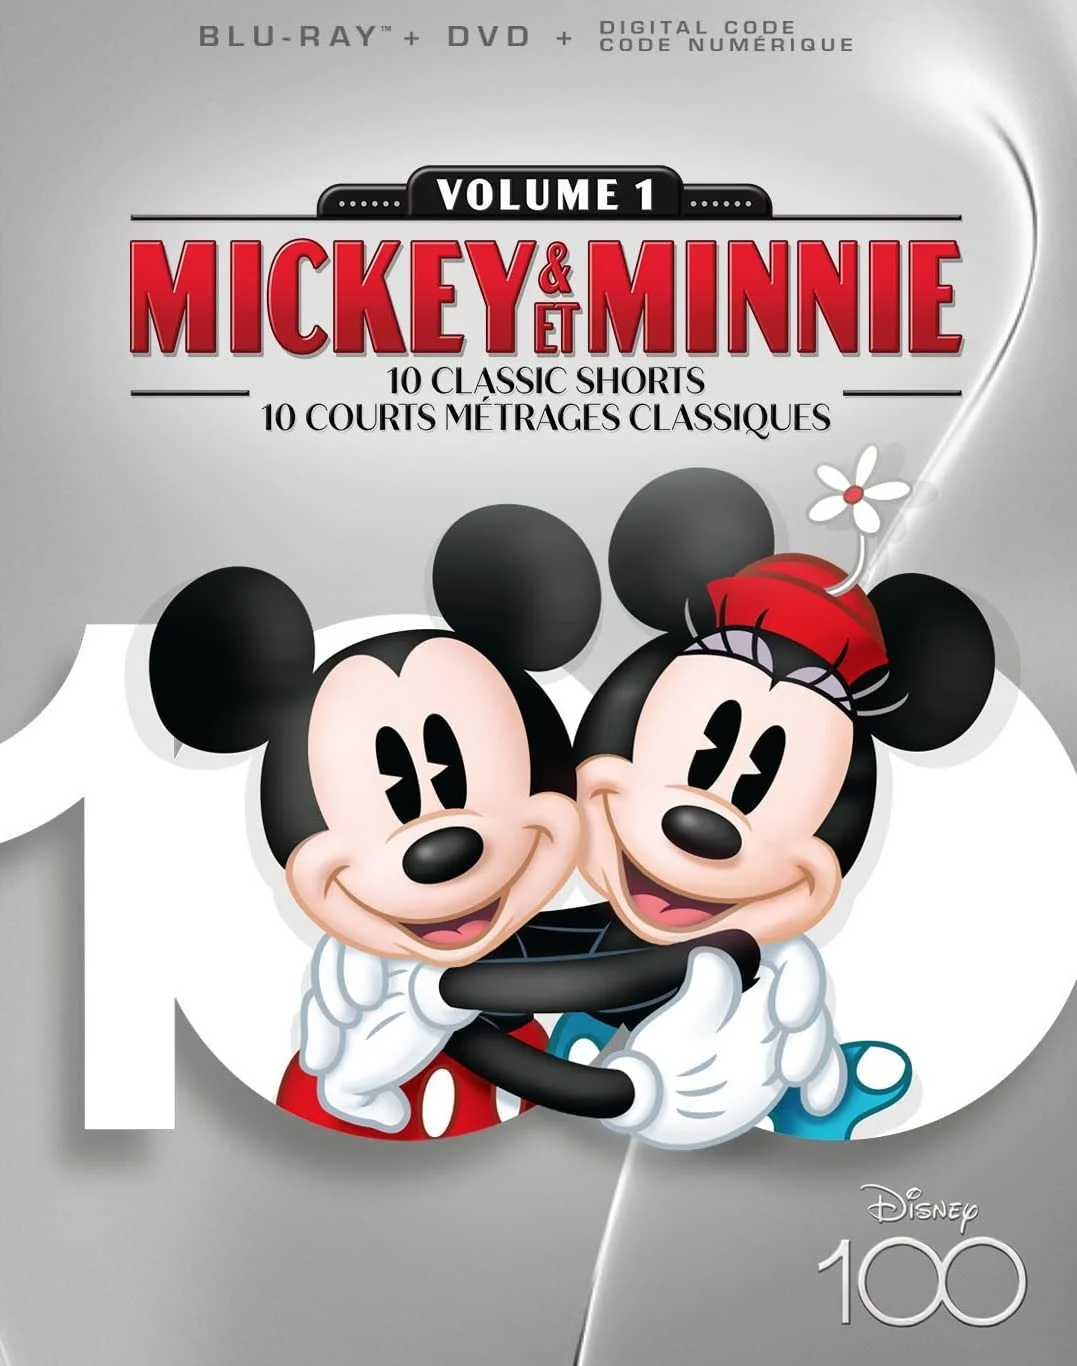 Mickey & Minnie 10 Classic Shorts: Vol. 1 (Blu-ray/DVD Combo) on MovieShack